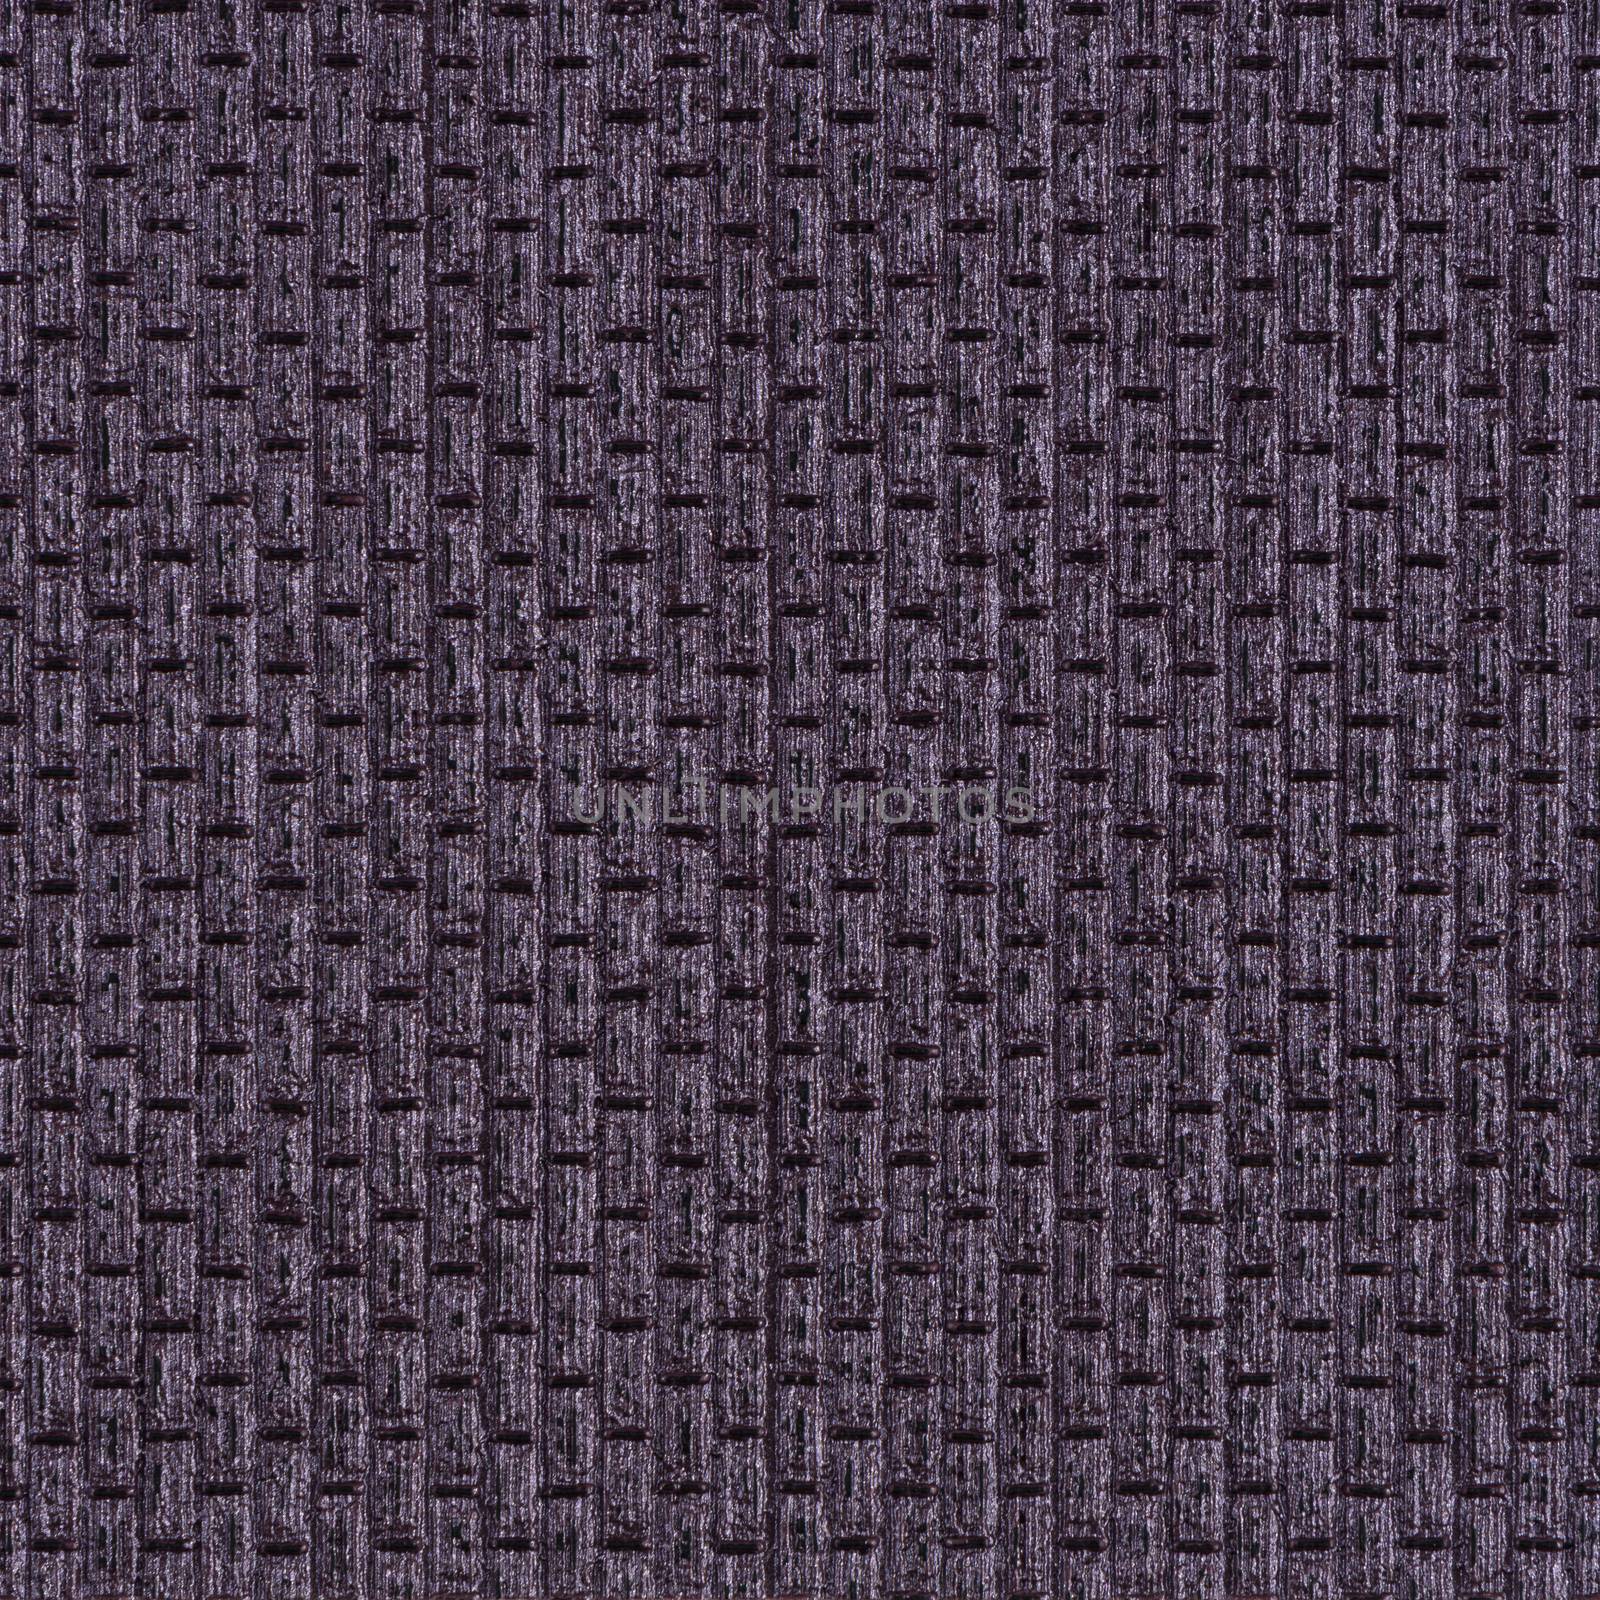 Purple vinyl texture by homydesign